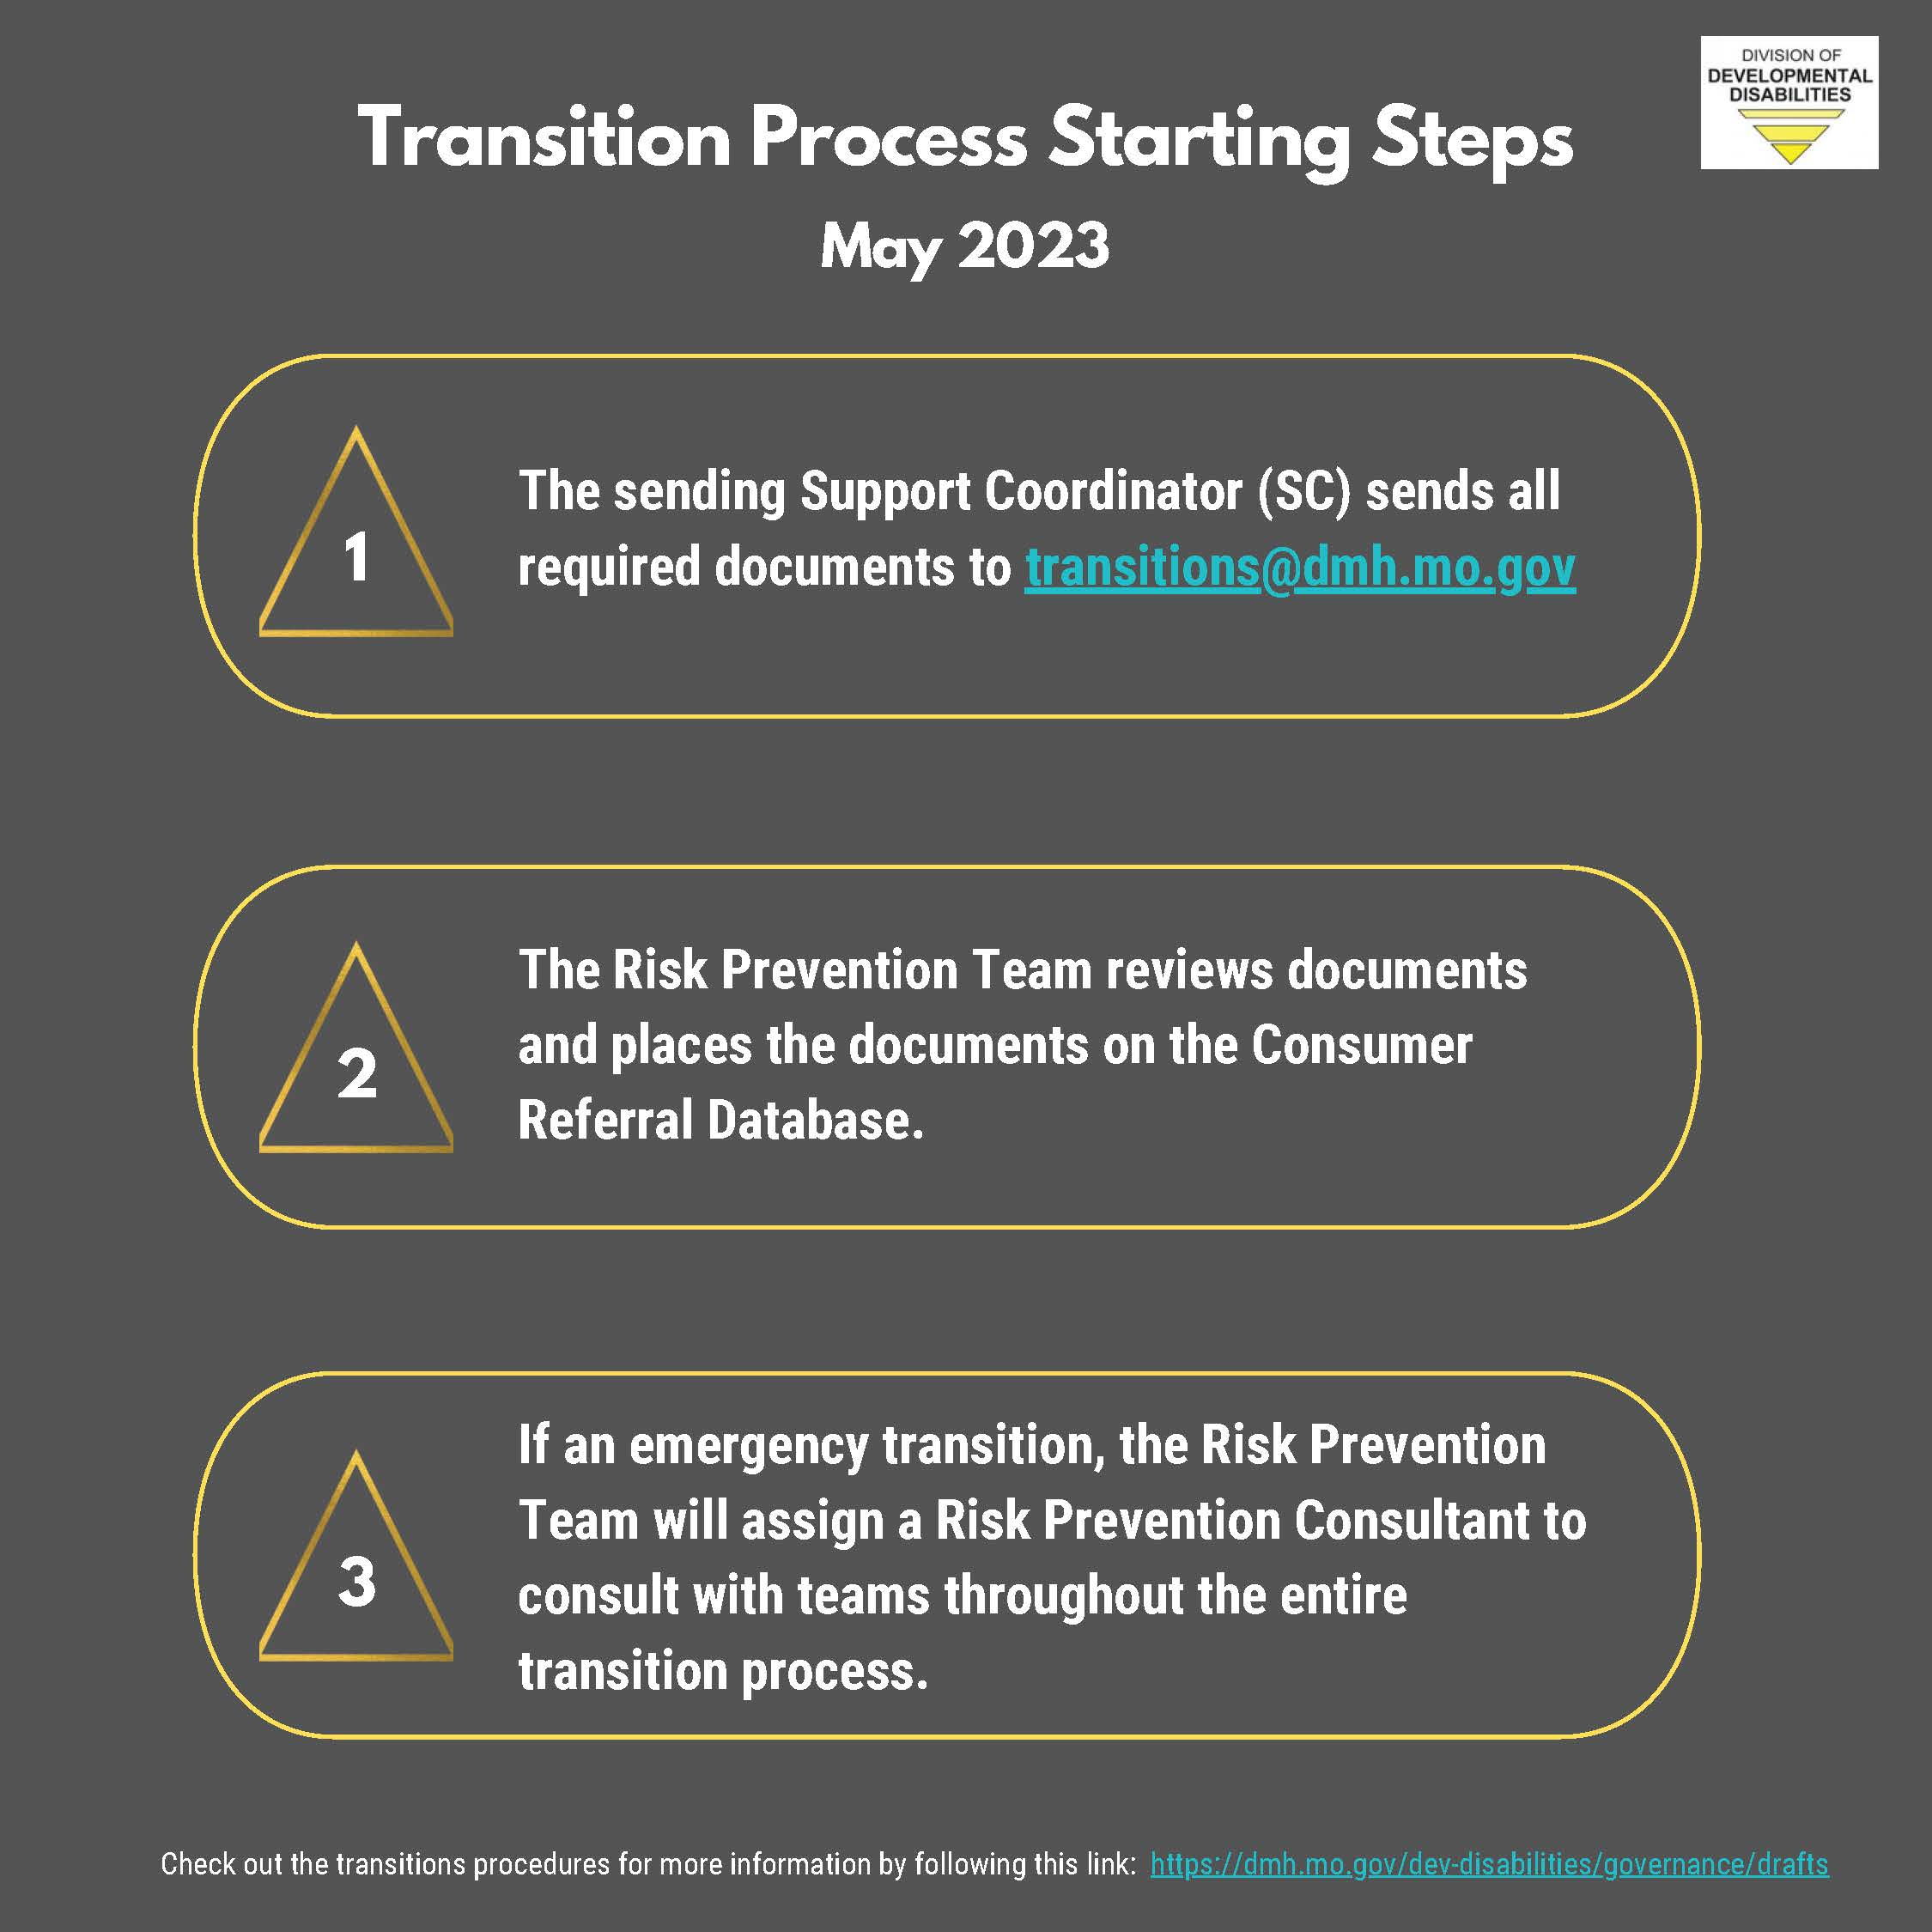 Transition process starting steps